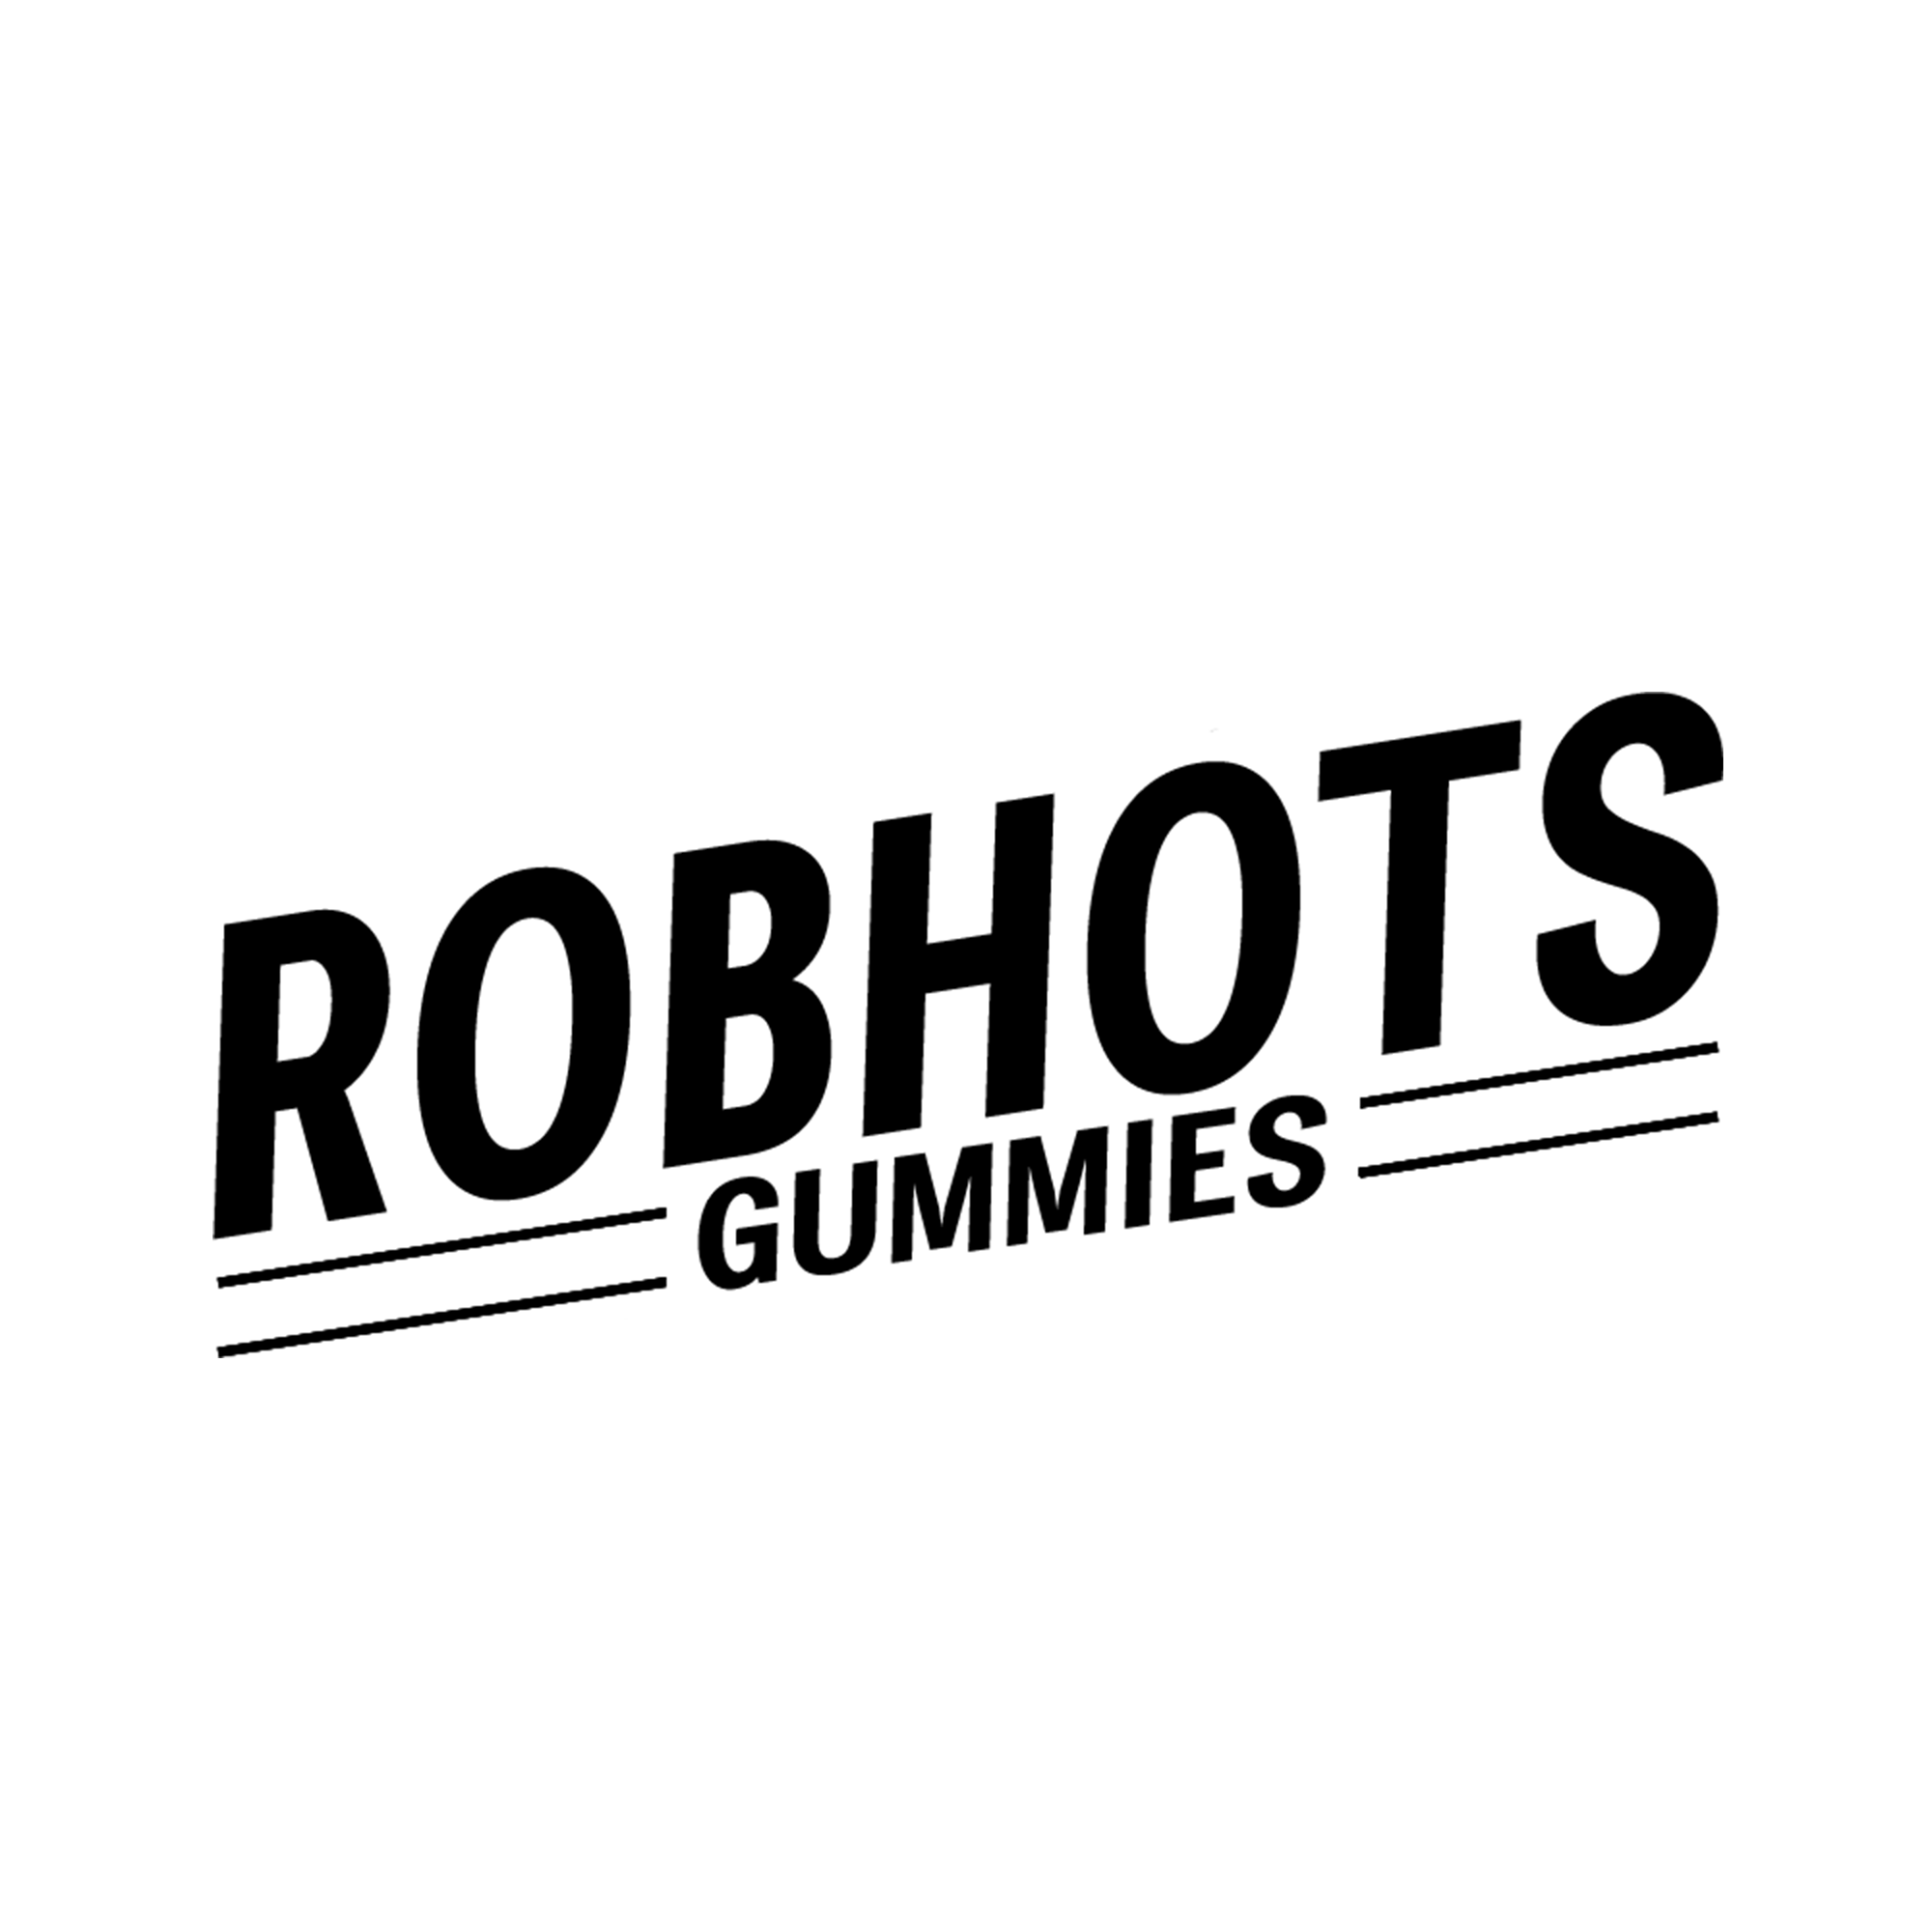 Robhots | Reds Gummies | 200mg